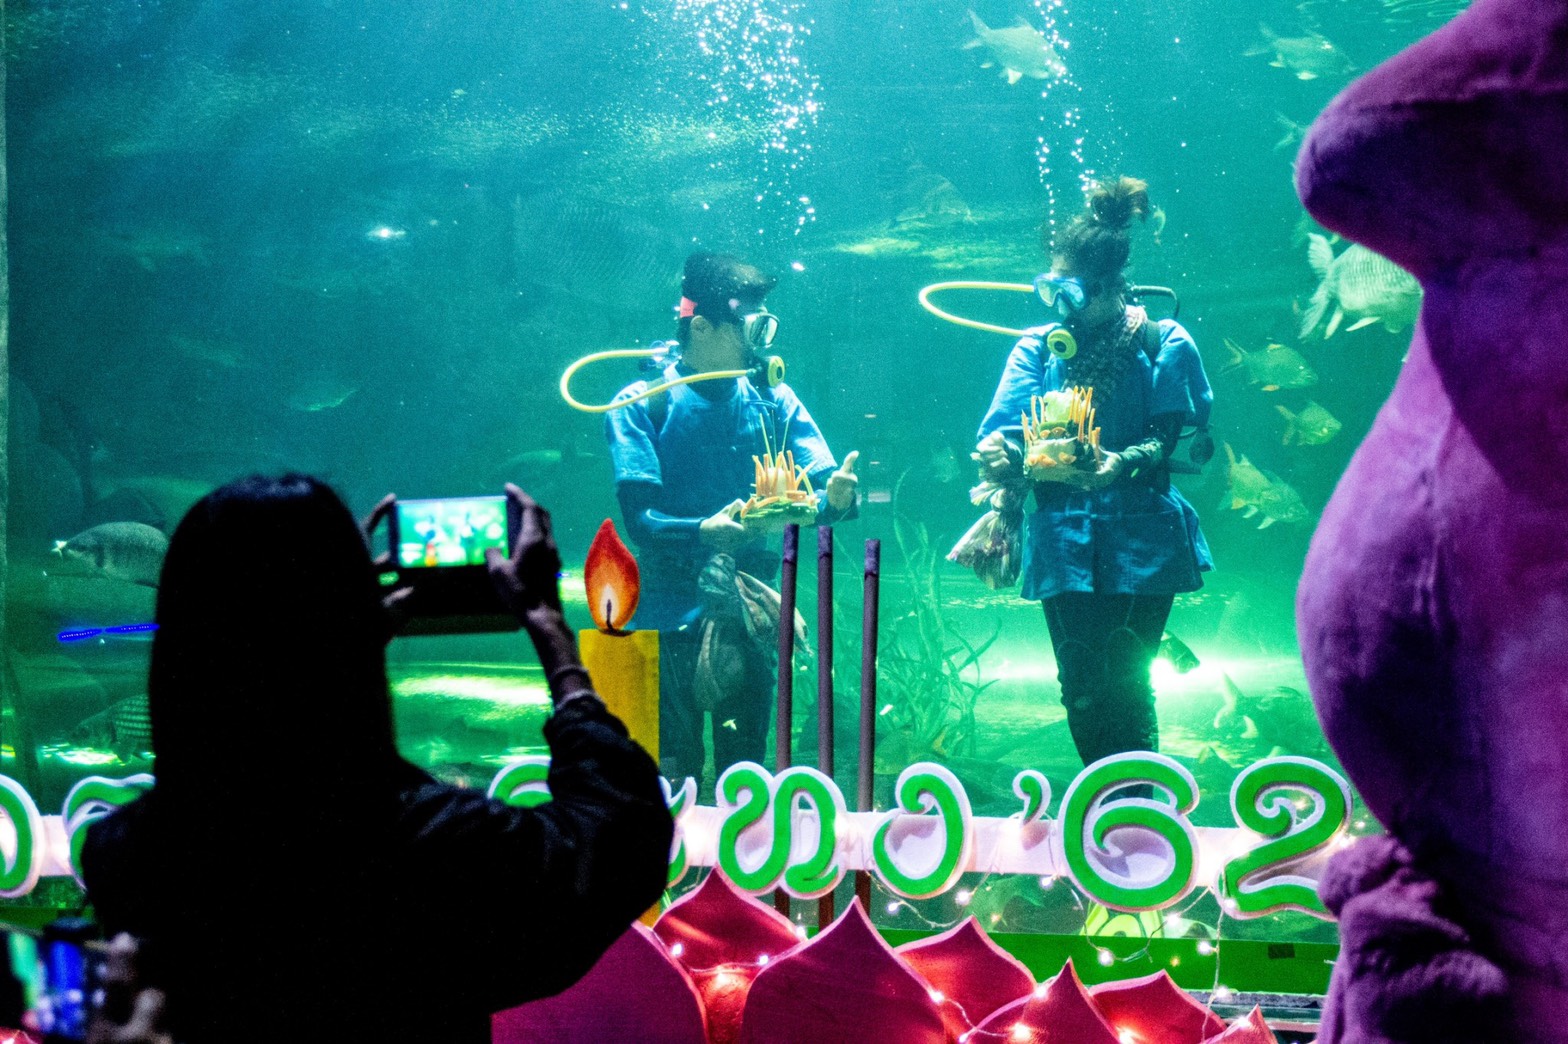 Underwater Loy Krathong at Chiang Mai Zoo’s aquarium.